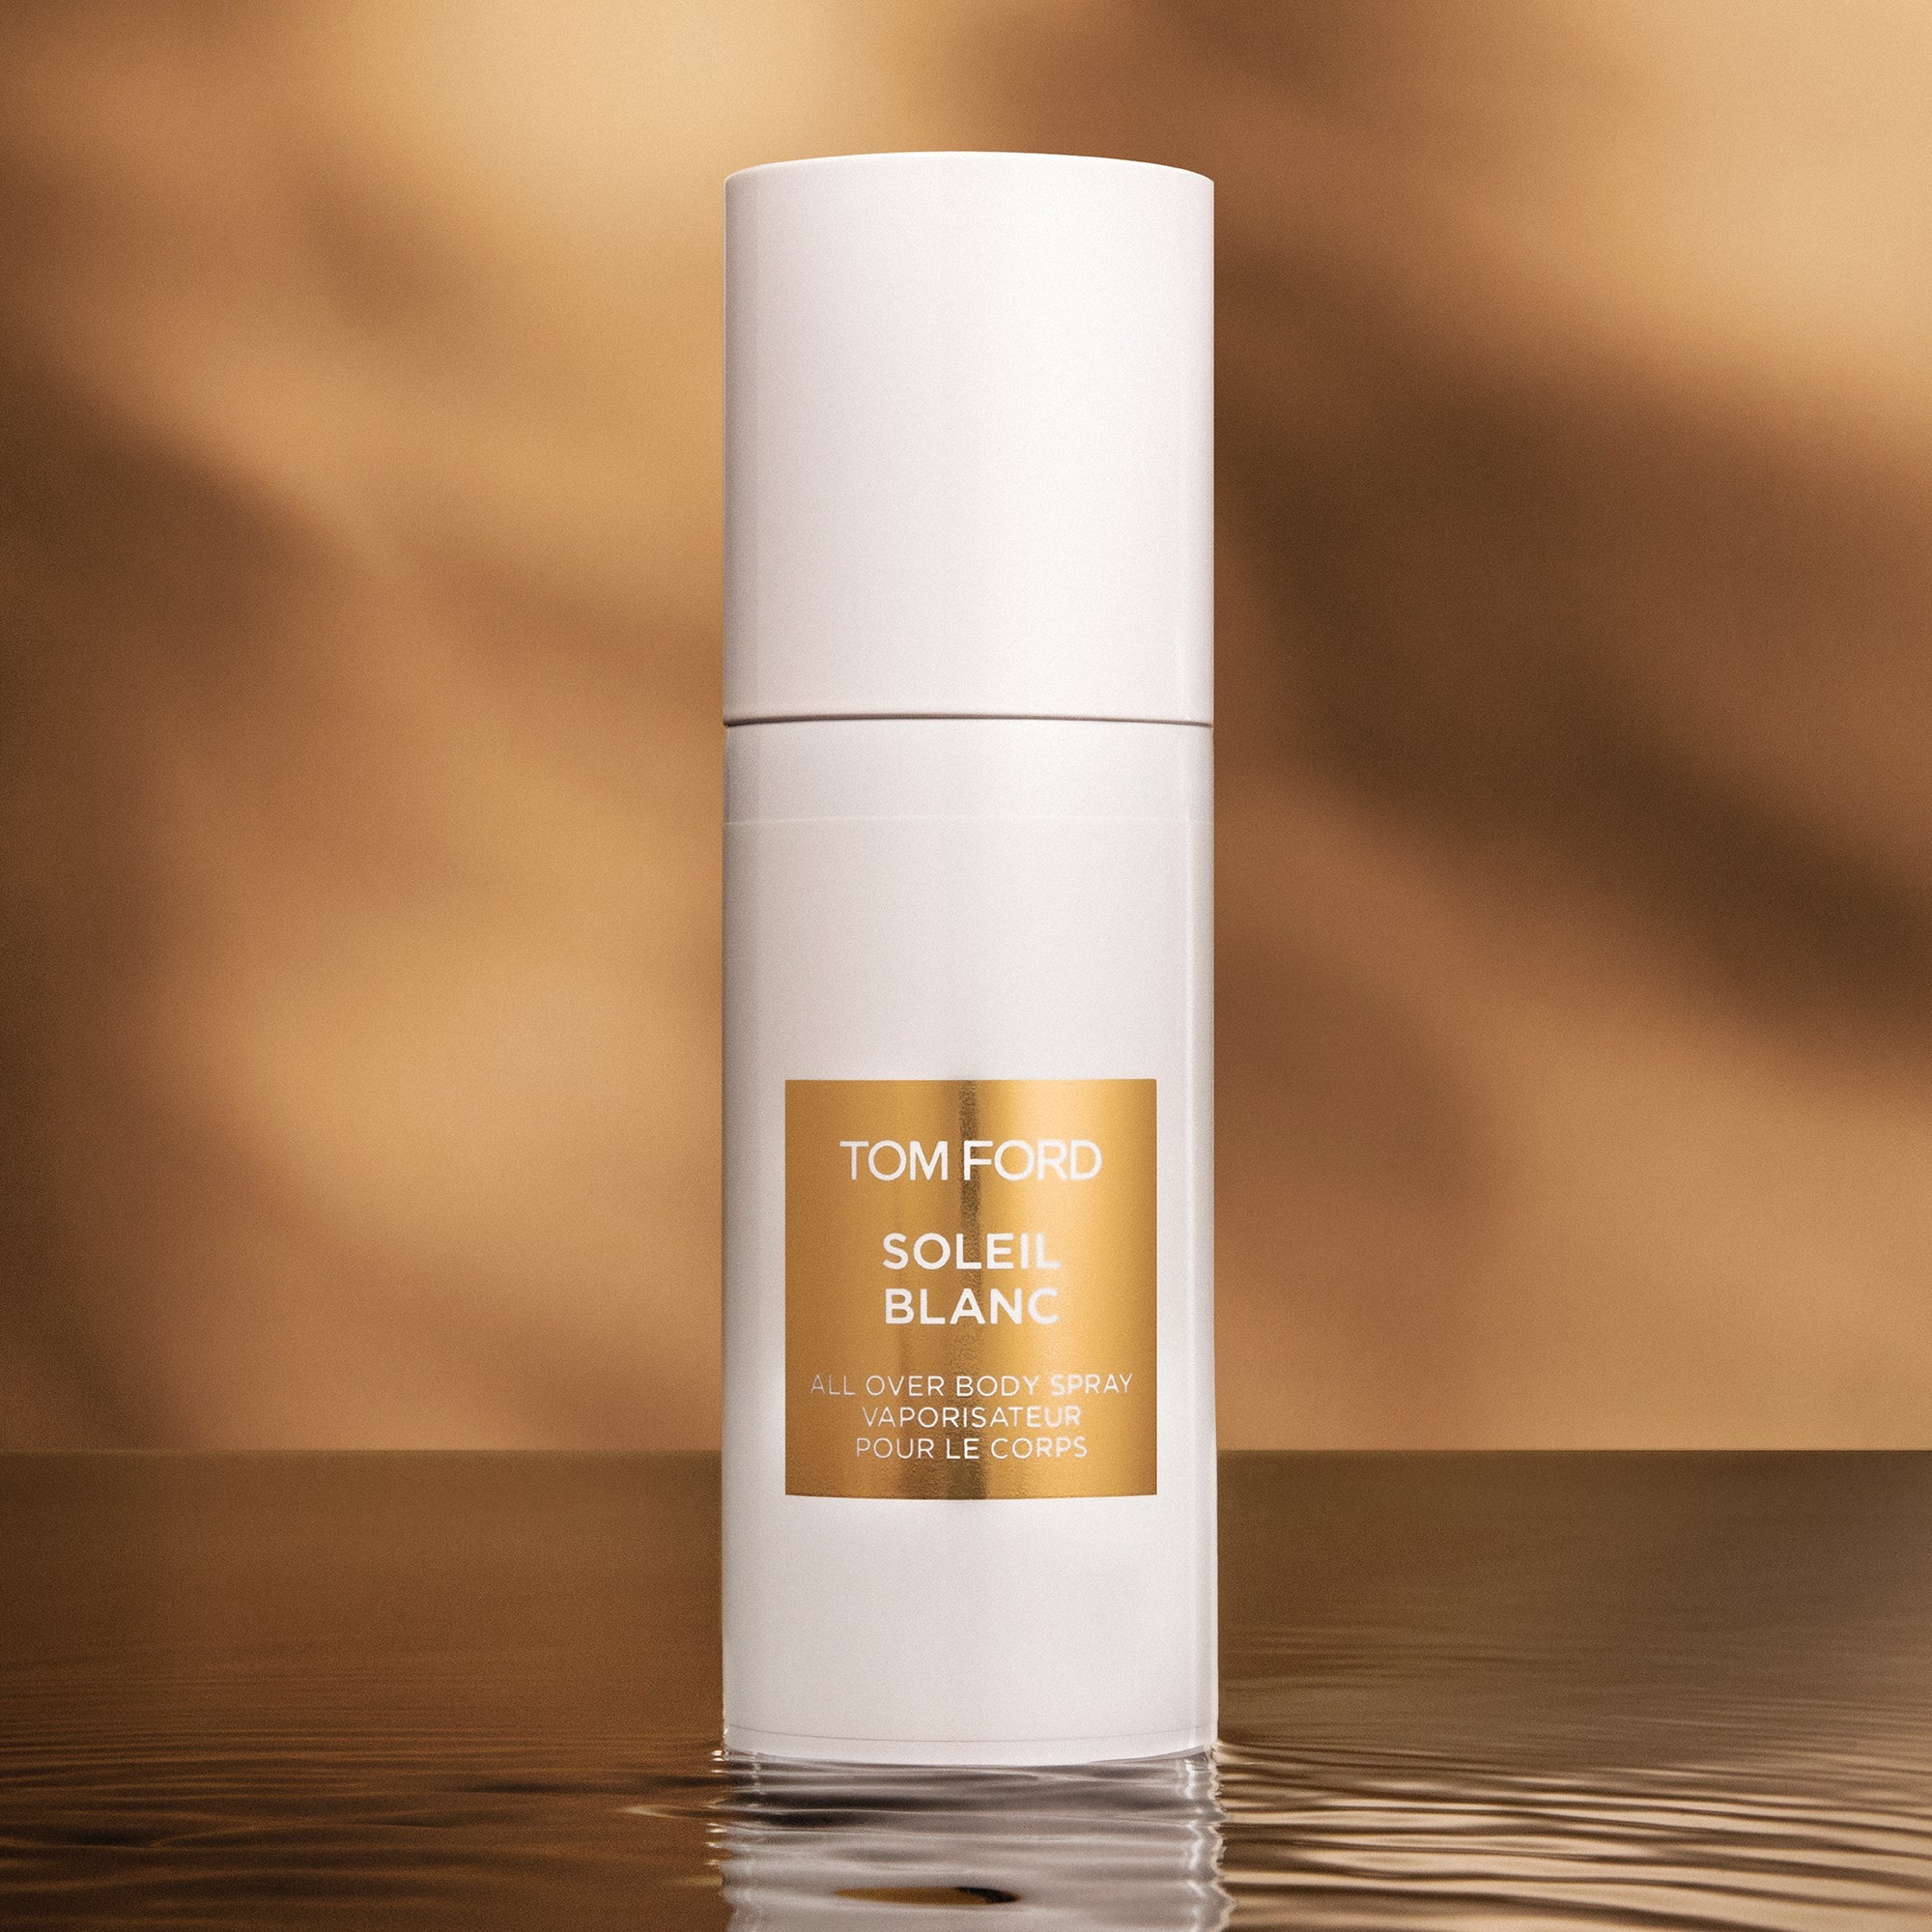 Tom Ford Soleil Blanc Body Spray | My Perfume Shop Australia